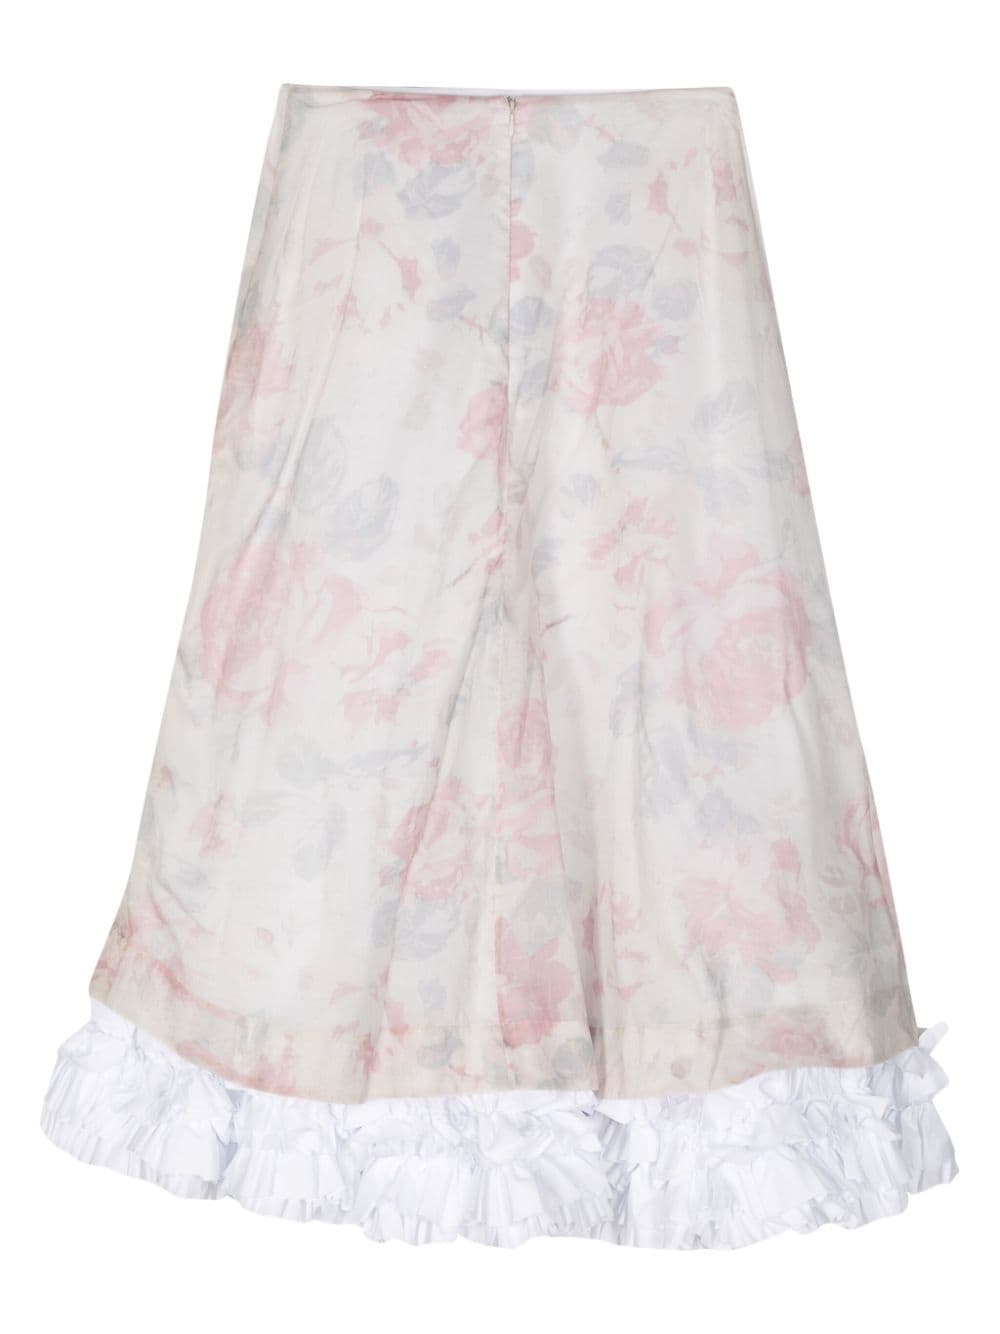 Molly Goddard Jules frilled cotton skirt - Beige